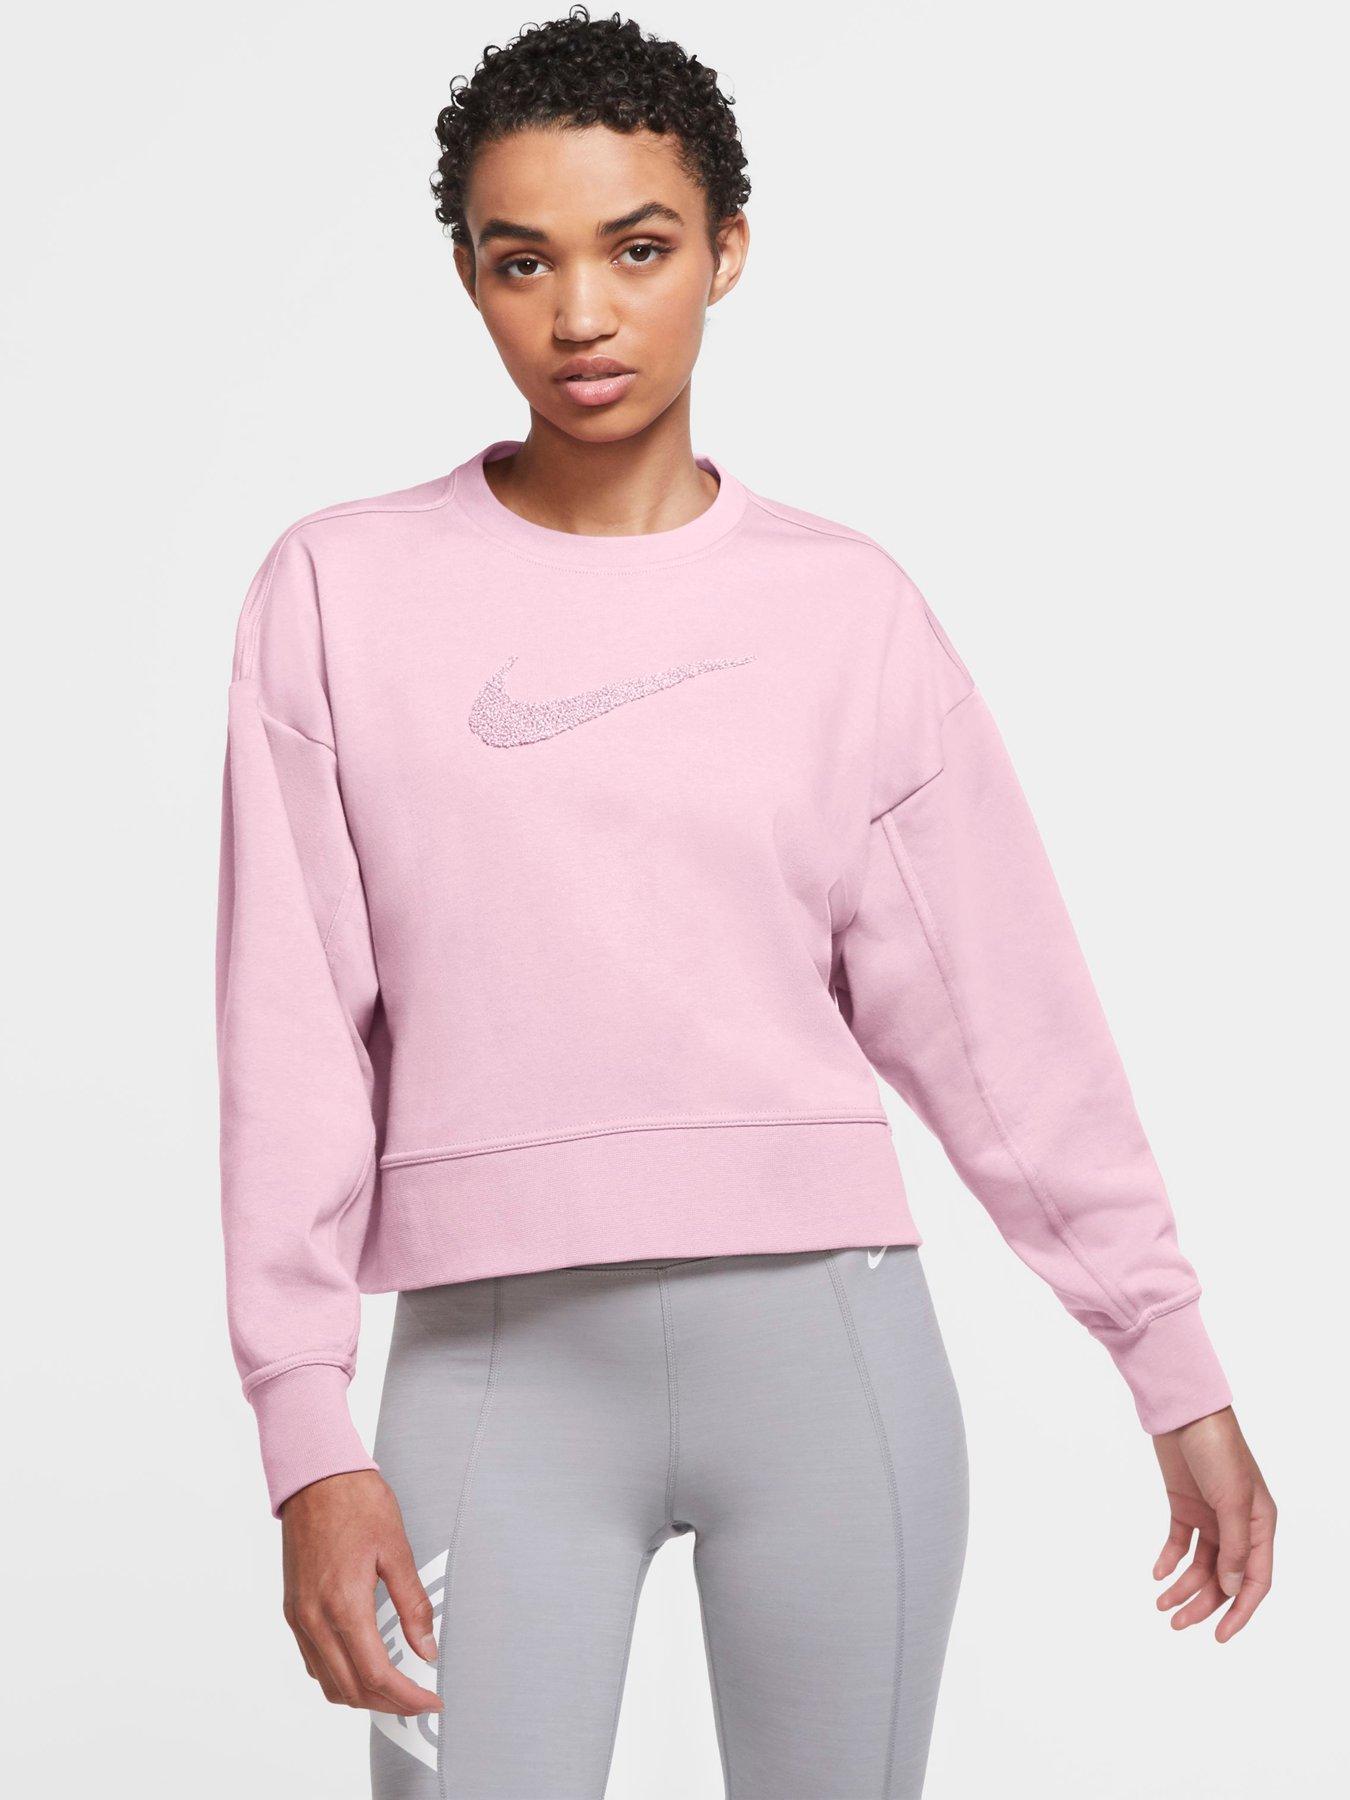 nike foundation crew sweatshirt pink